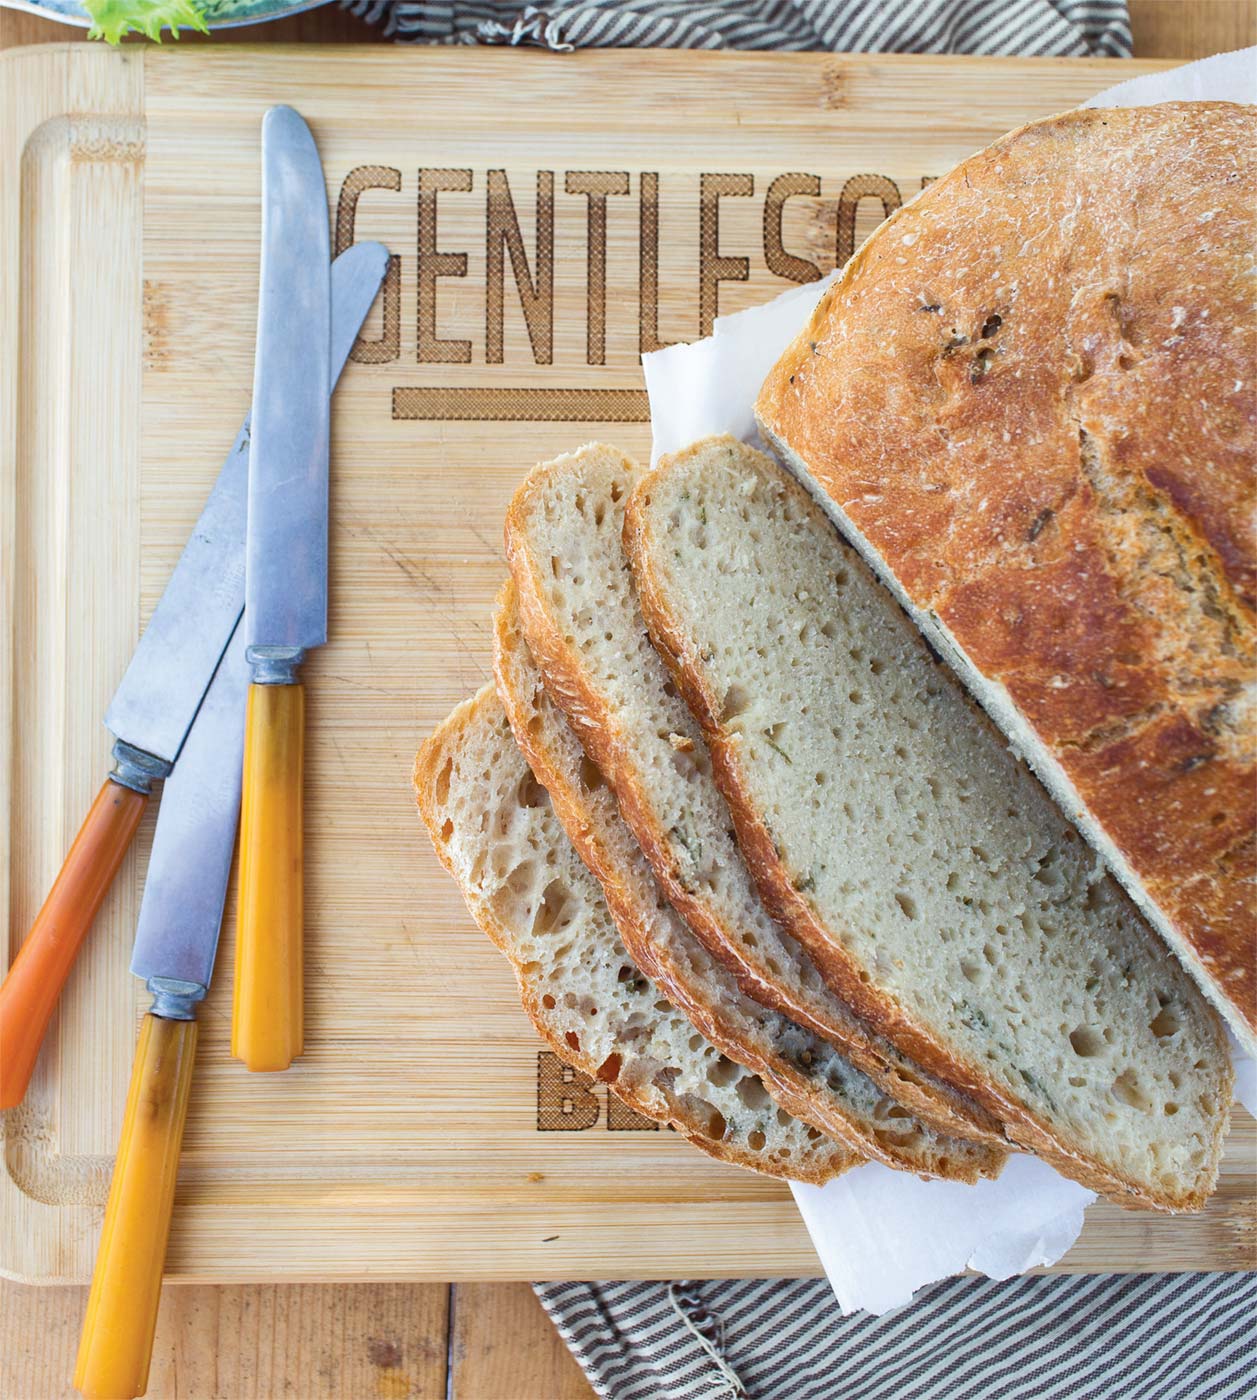 https://www.edibledfw.com/wp-content/uploads/2021/11/dutch-oven-rosemary-bread.jpg